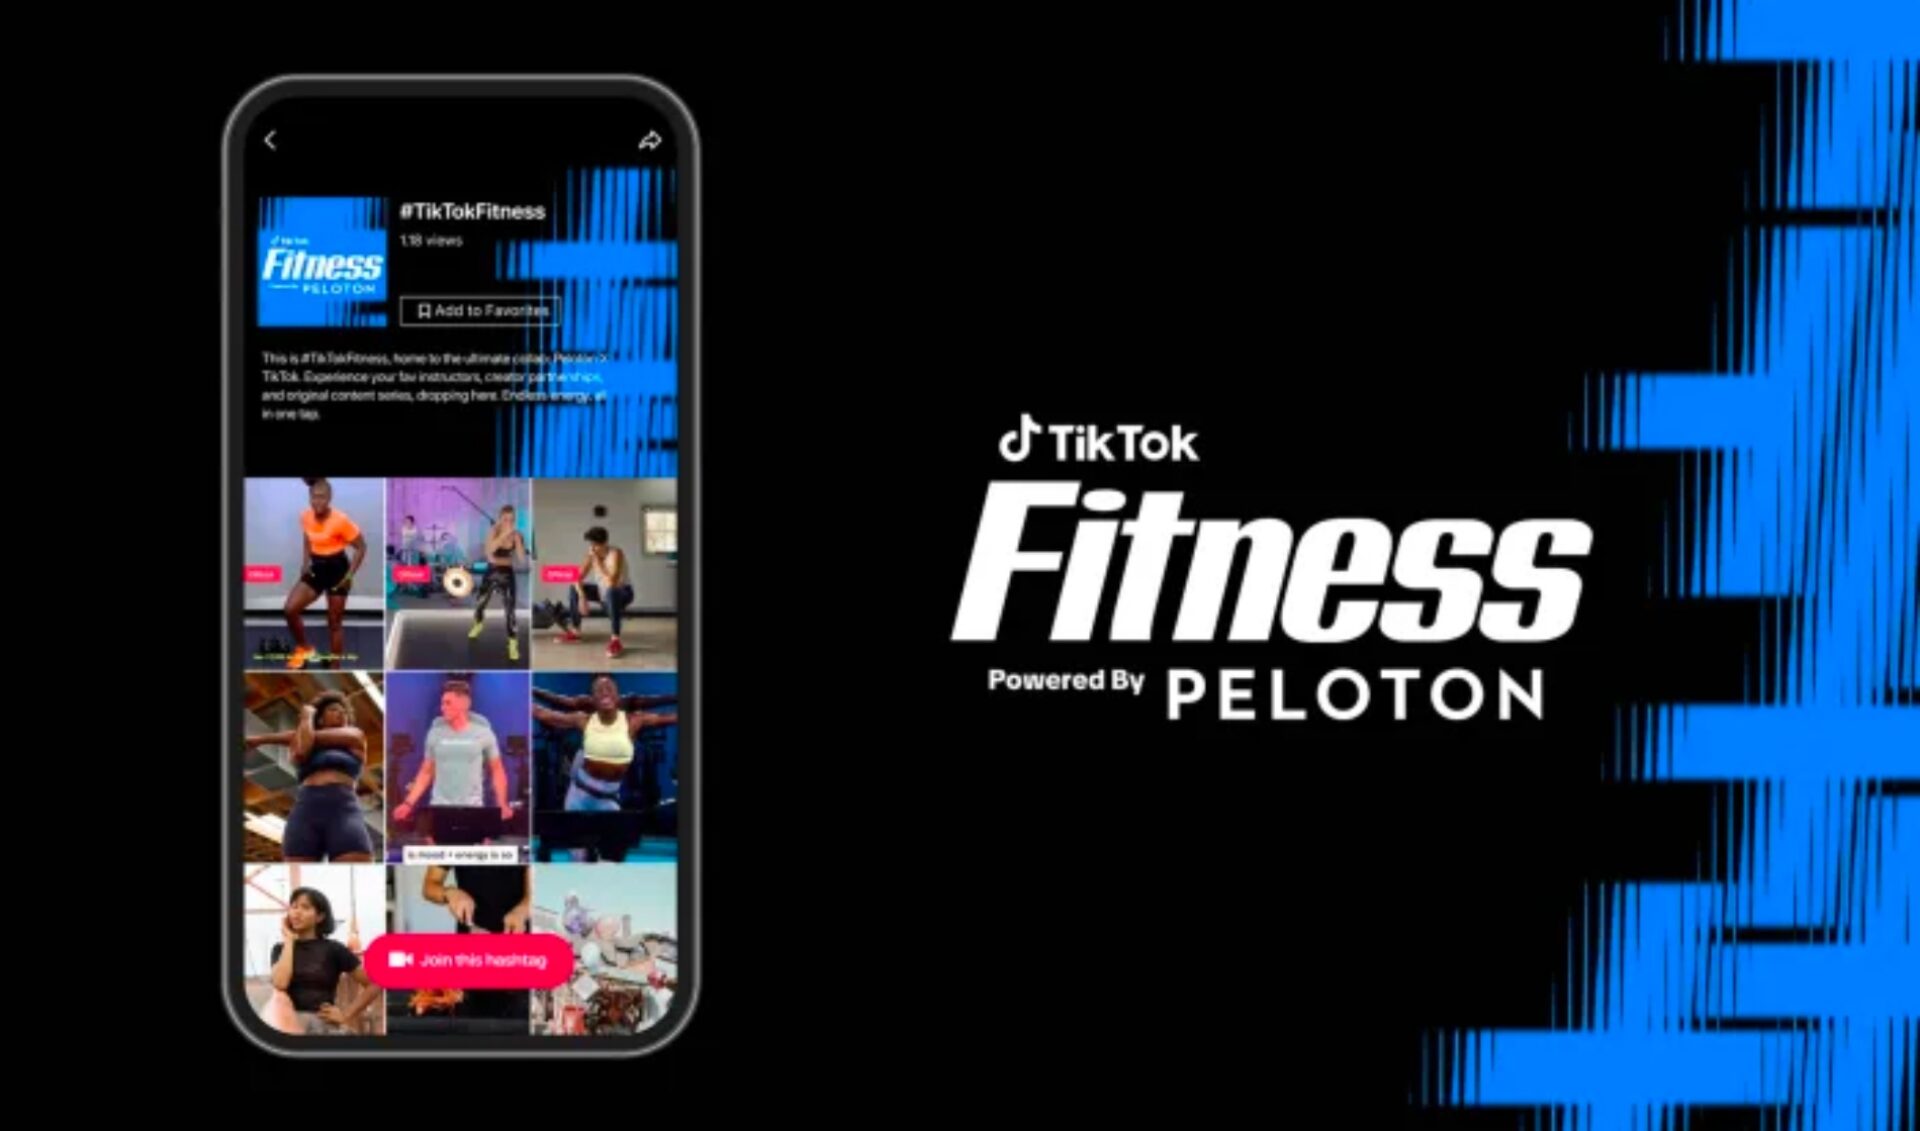 Peloton sees stock market bump after announcing TikTok fitness hub